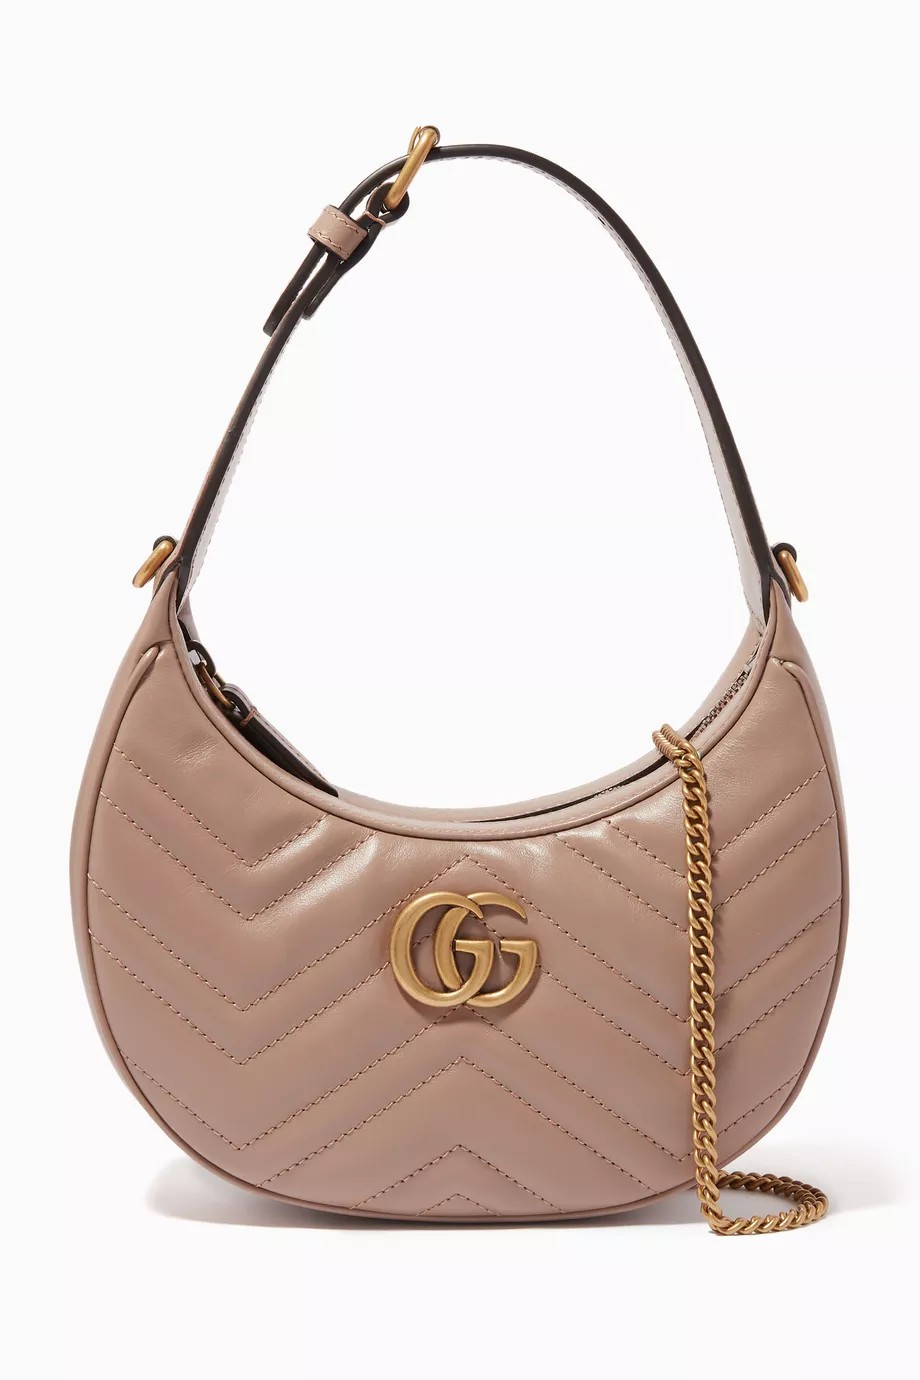 Gucci - GG Marmont Half-moon Mini Bag - Beige